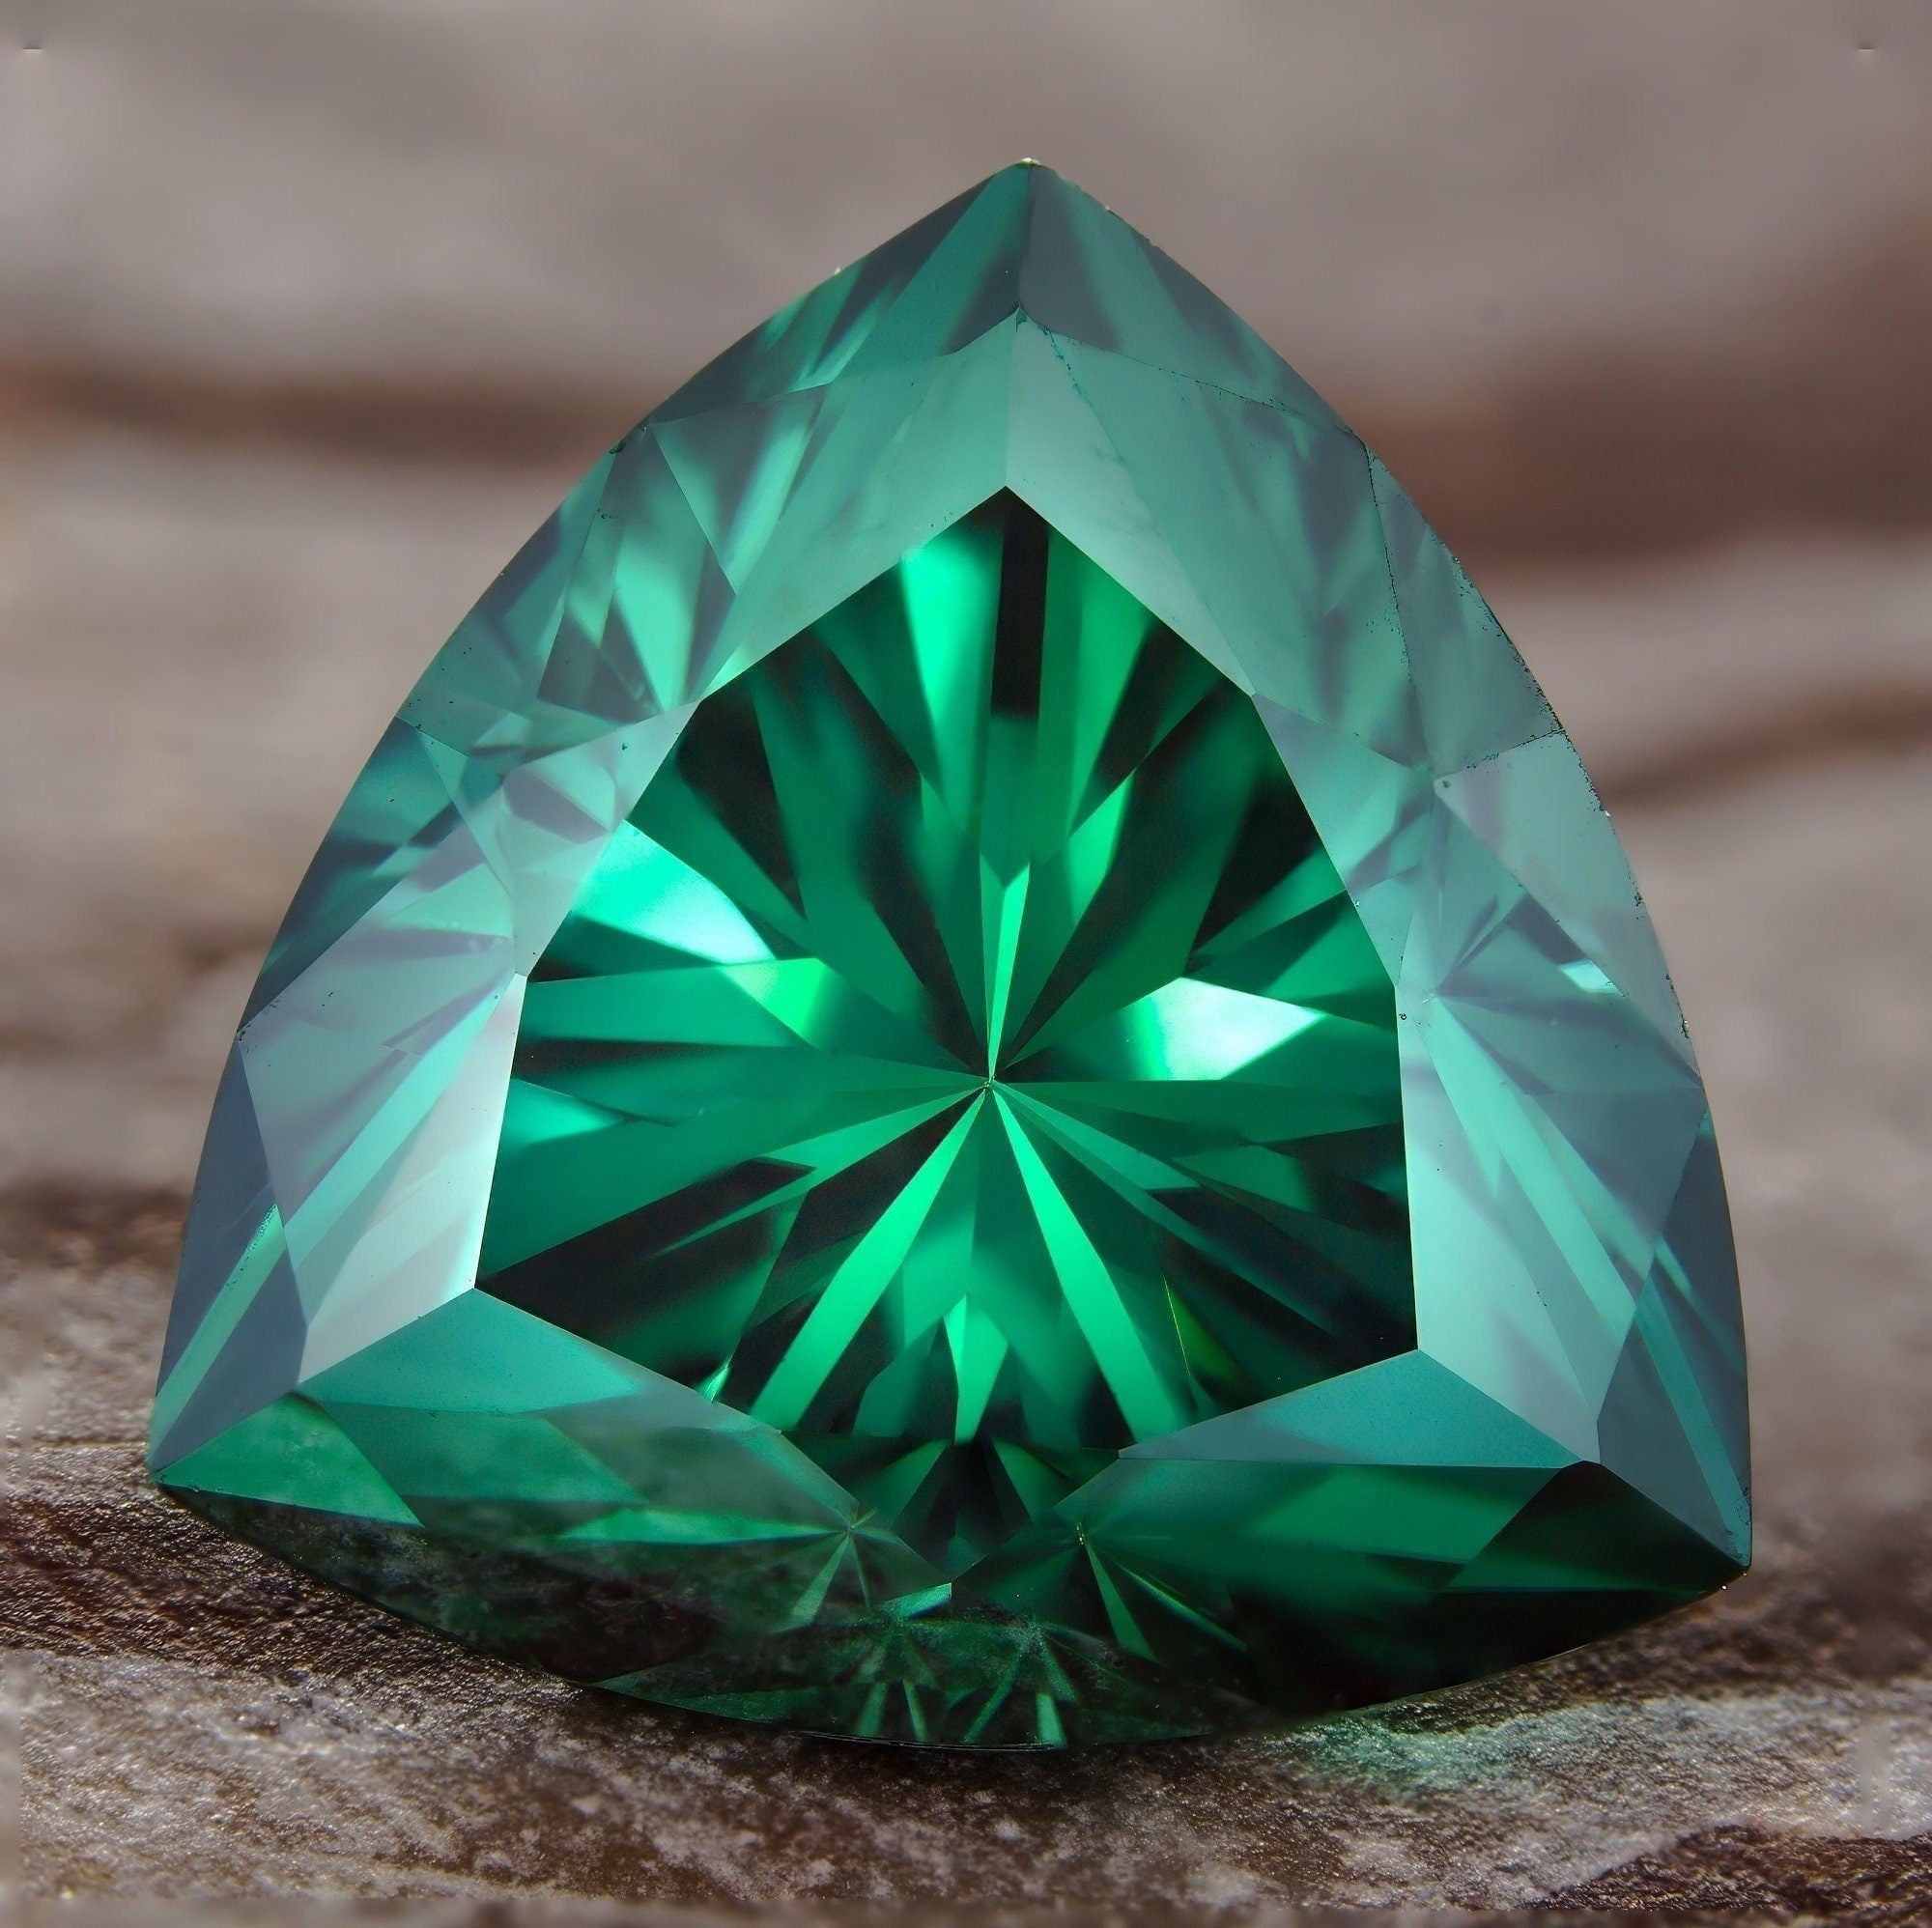 8mm 2ct loose moissanite certified vvs1 vivid green trillion cut gra laboratory gemstone